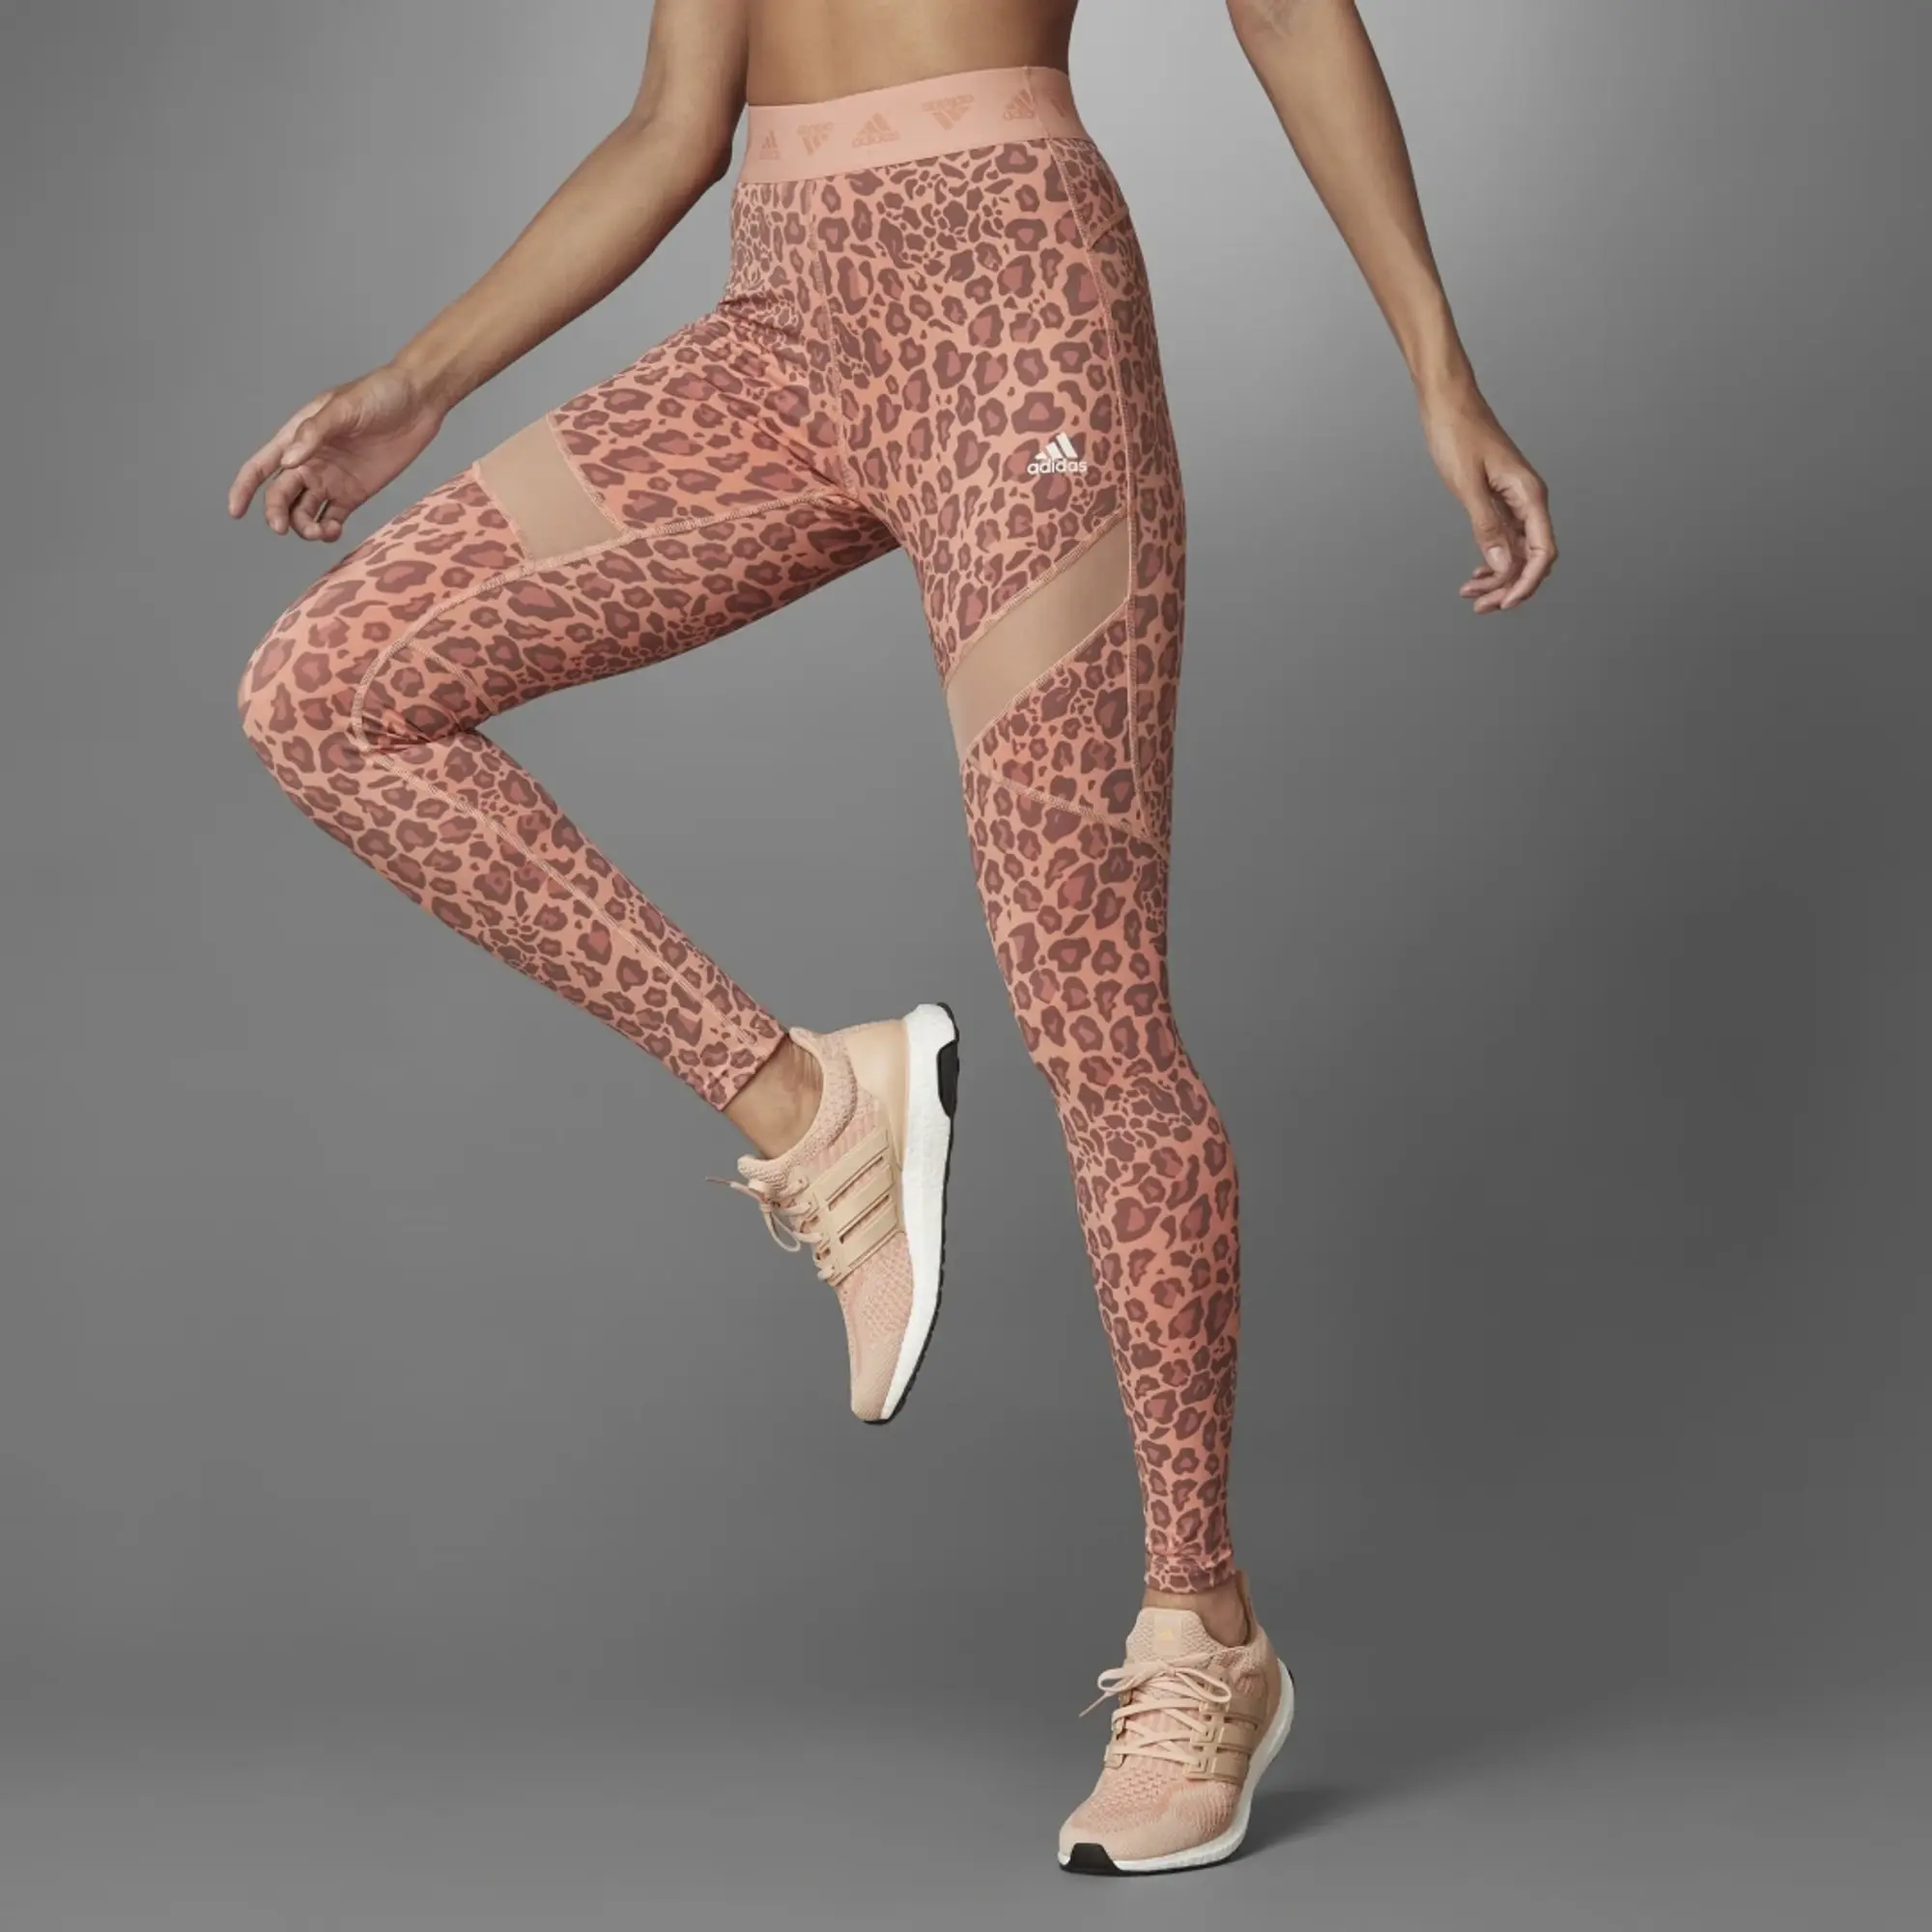 Adidas Training Leggings With Insert Detail In Orange Leopard Print, HM8646